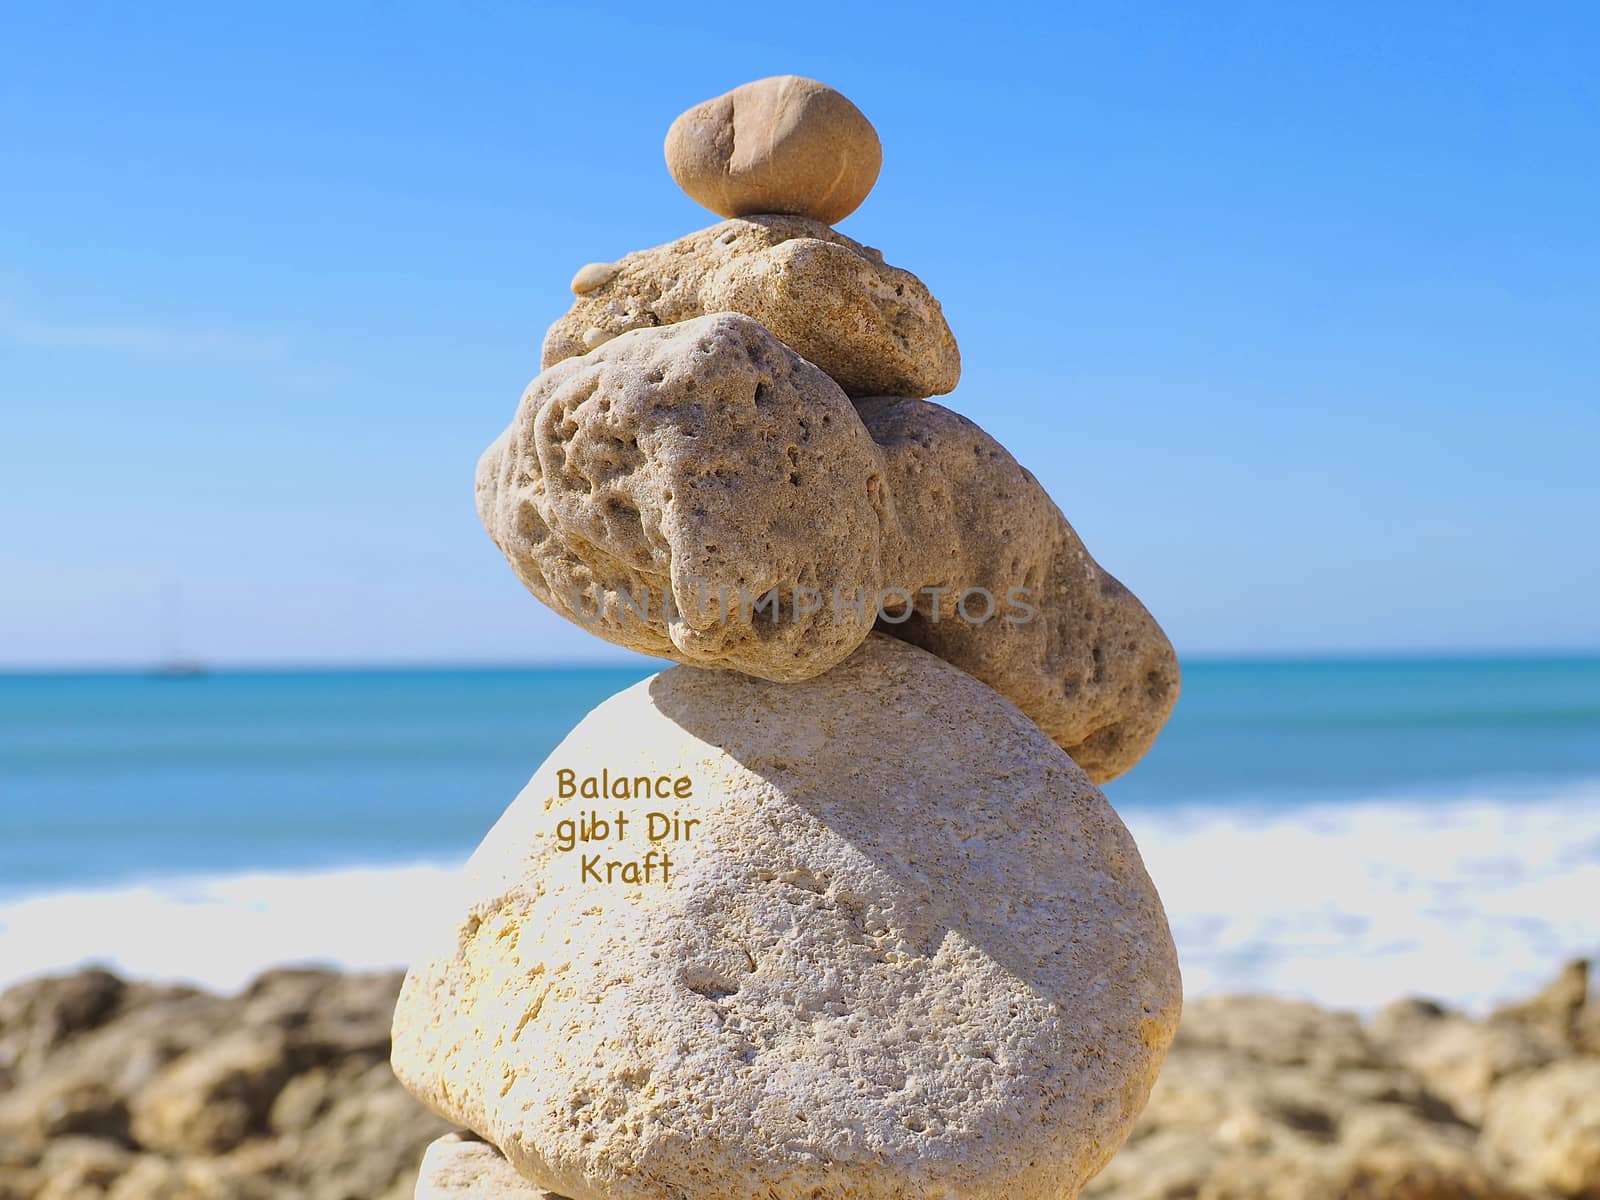 Stacks of stones in front of blue ocean by Stimmungsbilder